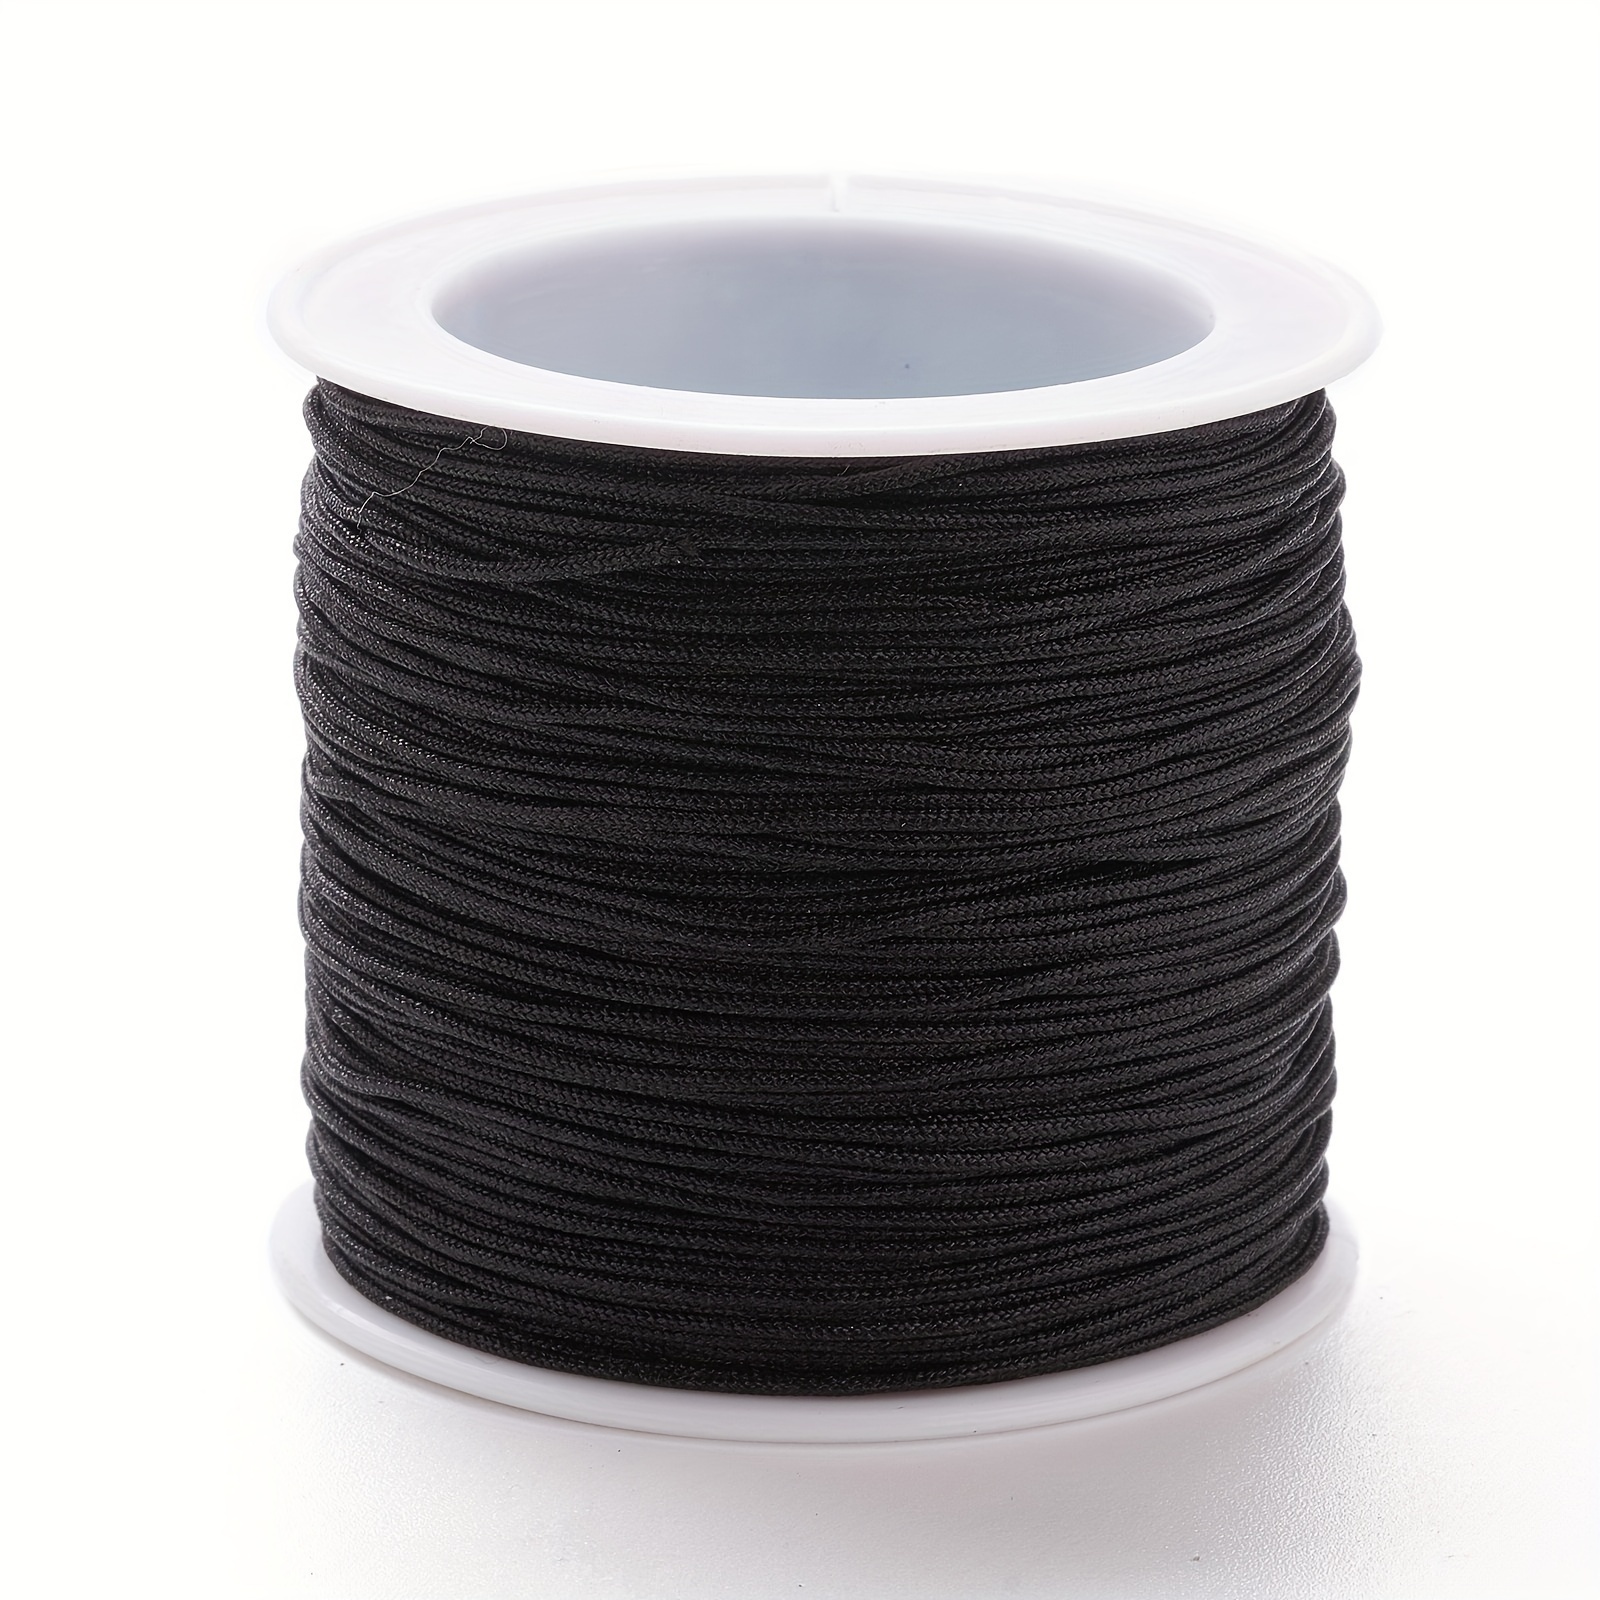 1roll 0.6mm DIY Nylon String For Bracelets,Beading, Necklaces